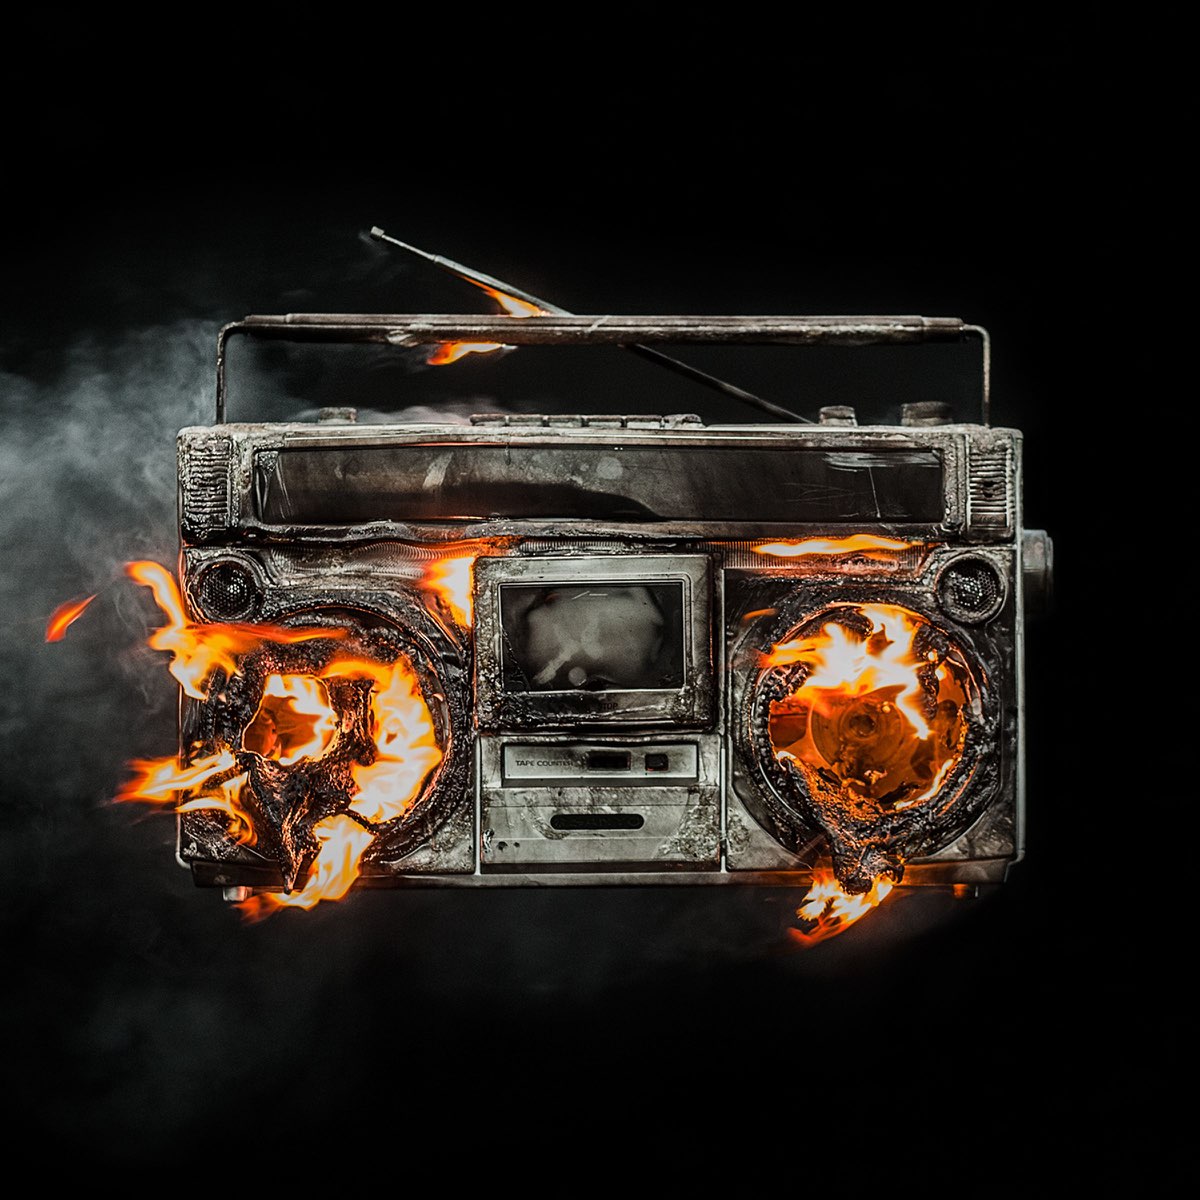 Green Day — Revolution Radio cover artwork